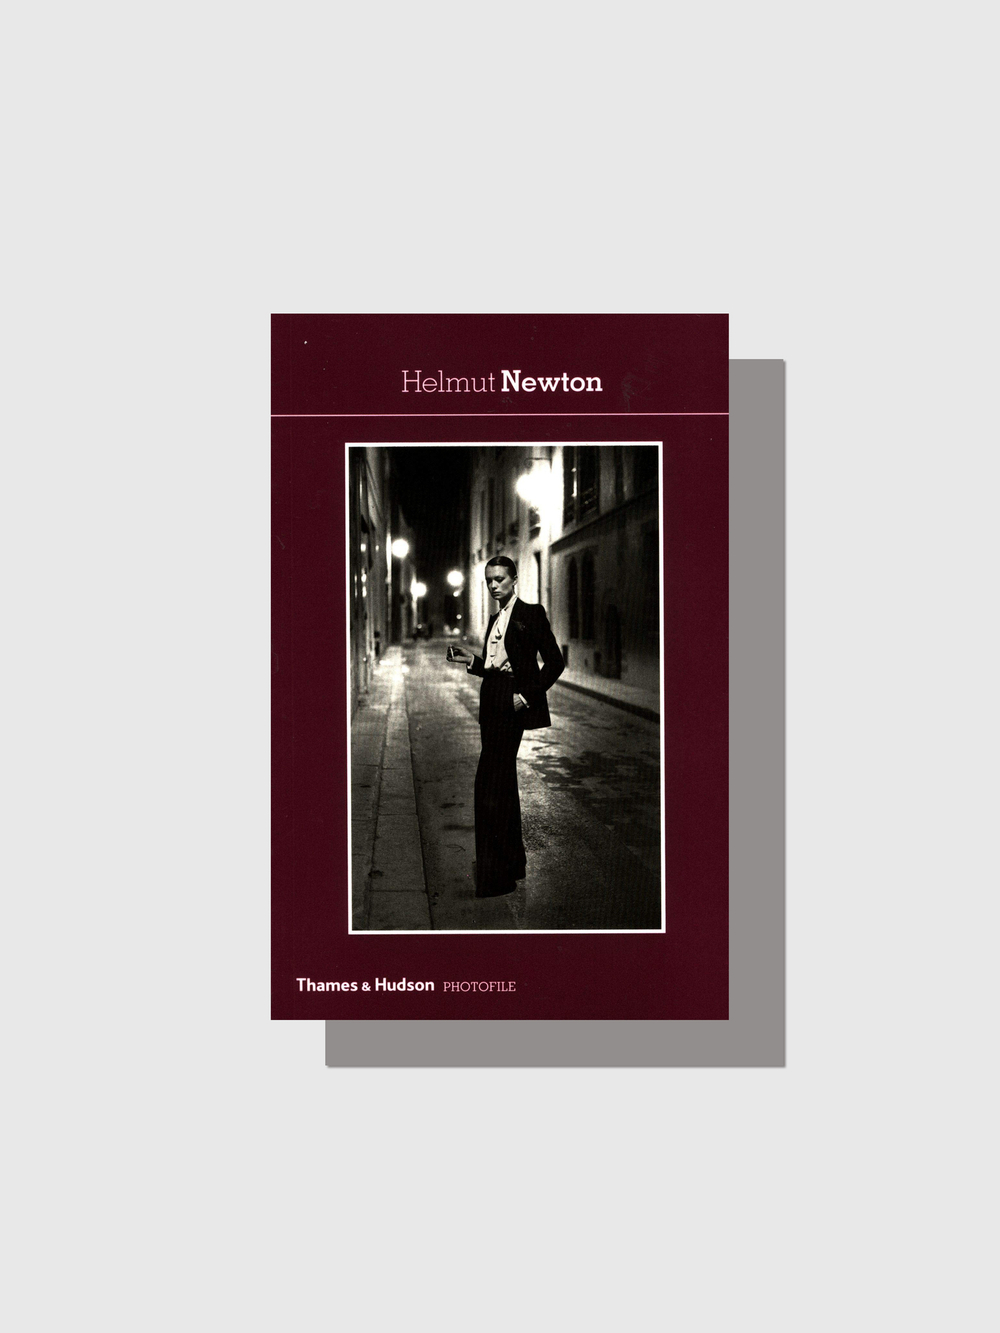 Книга Helmut Newton (Photofile) (Thames & Hudson)